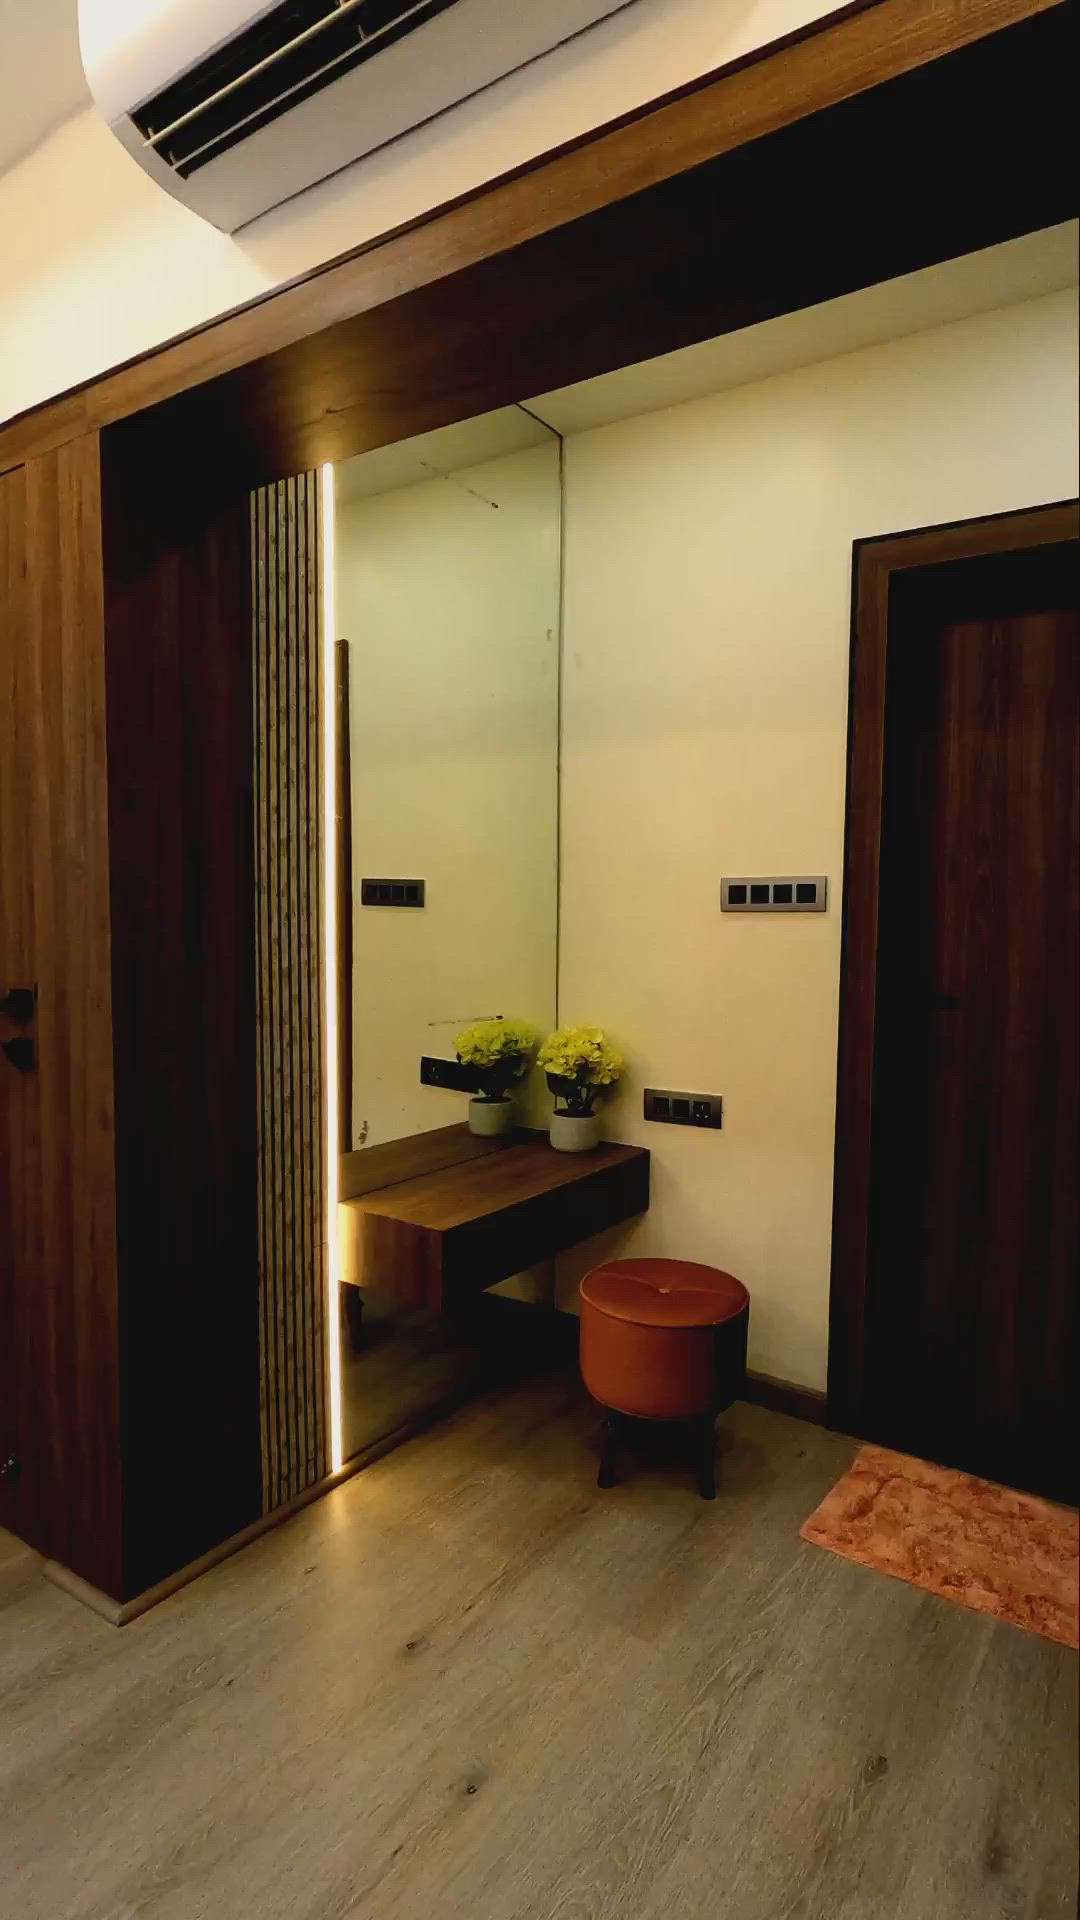 complete House interior ❤️🍃🏠45 lakhs
#InteriorDesigner #HouseDesigns #bhopali #modularwardrobe #BedroomDecor #KidsRoom #MasterBedroom #LivingroomDesigns #KitchenIdeas #BathroomStorage #WoodenBeds